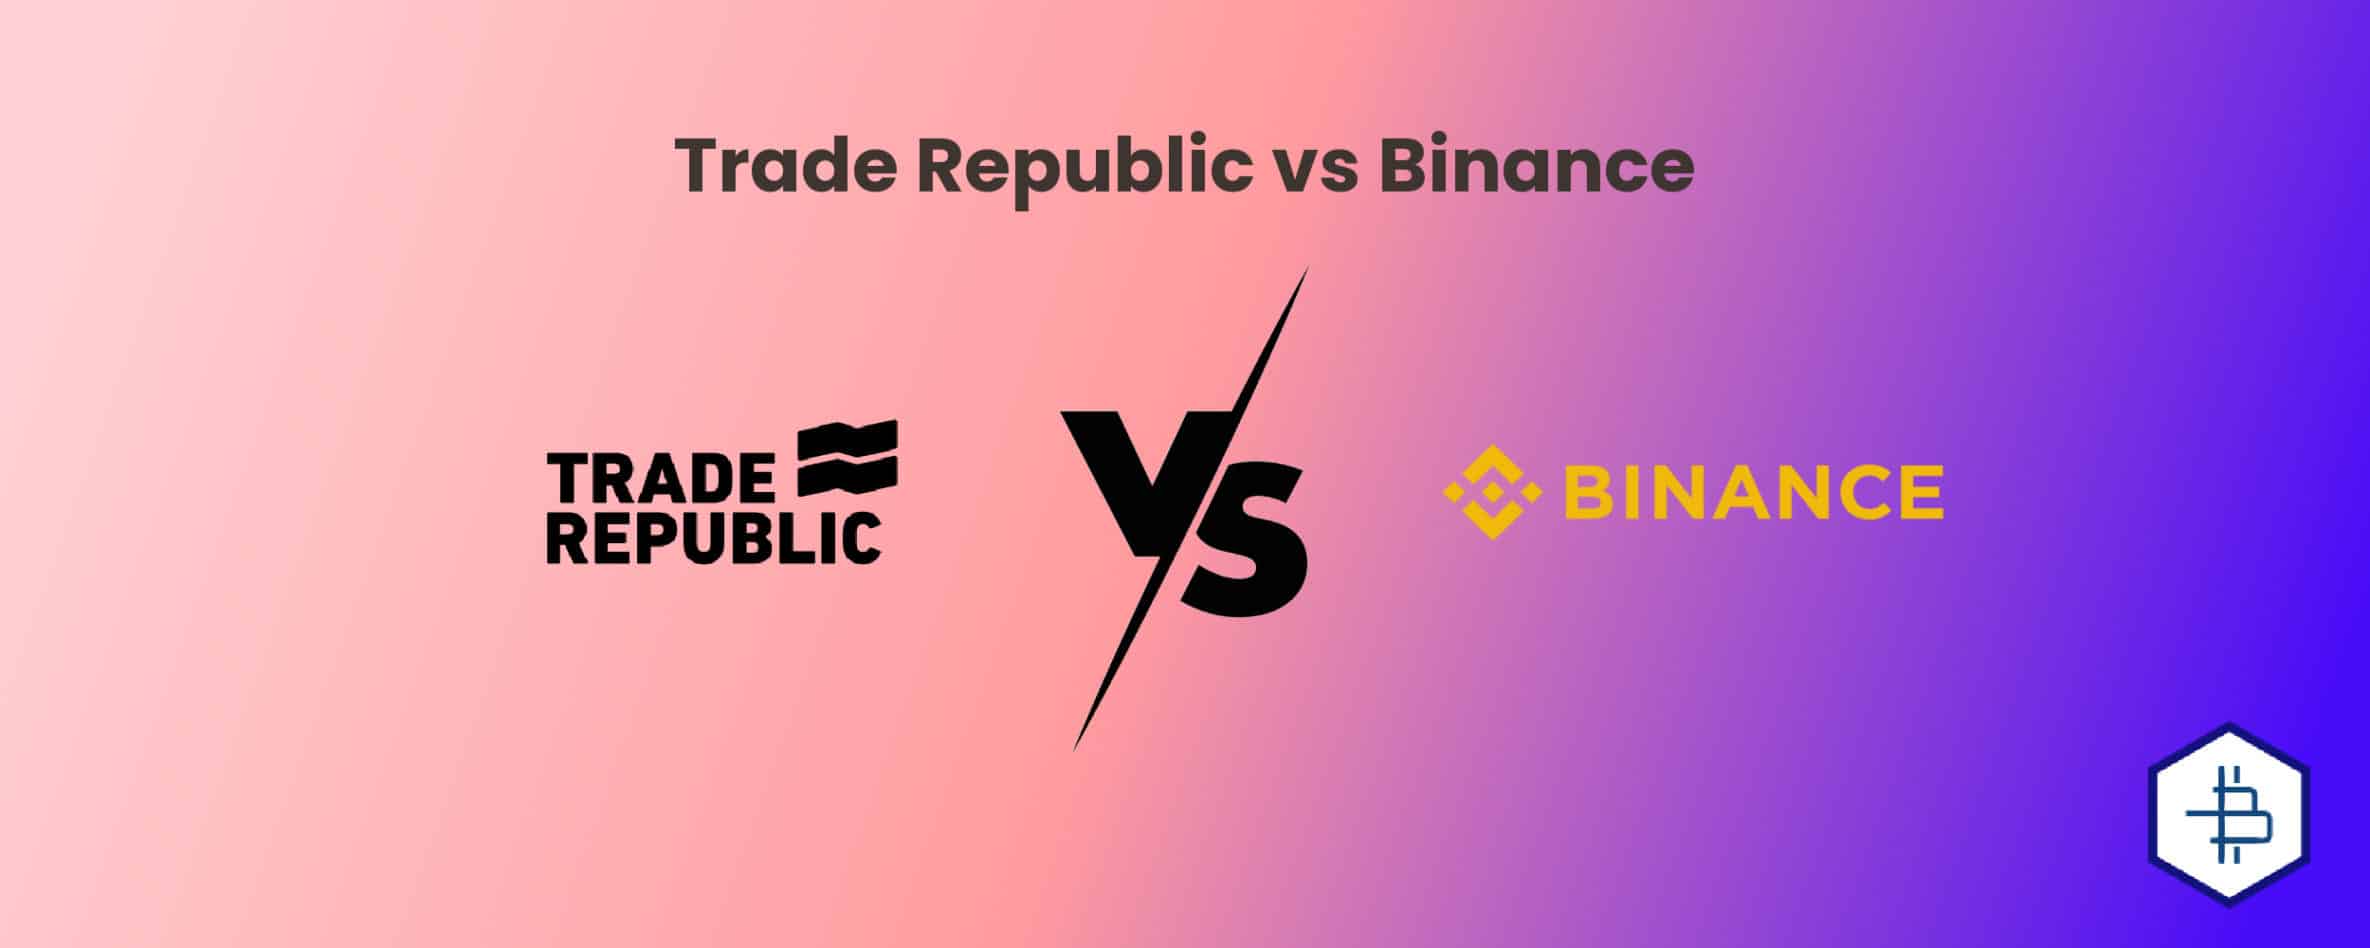 Trade Republic vs Binance